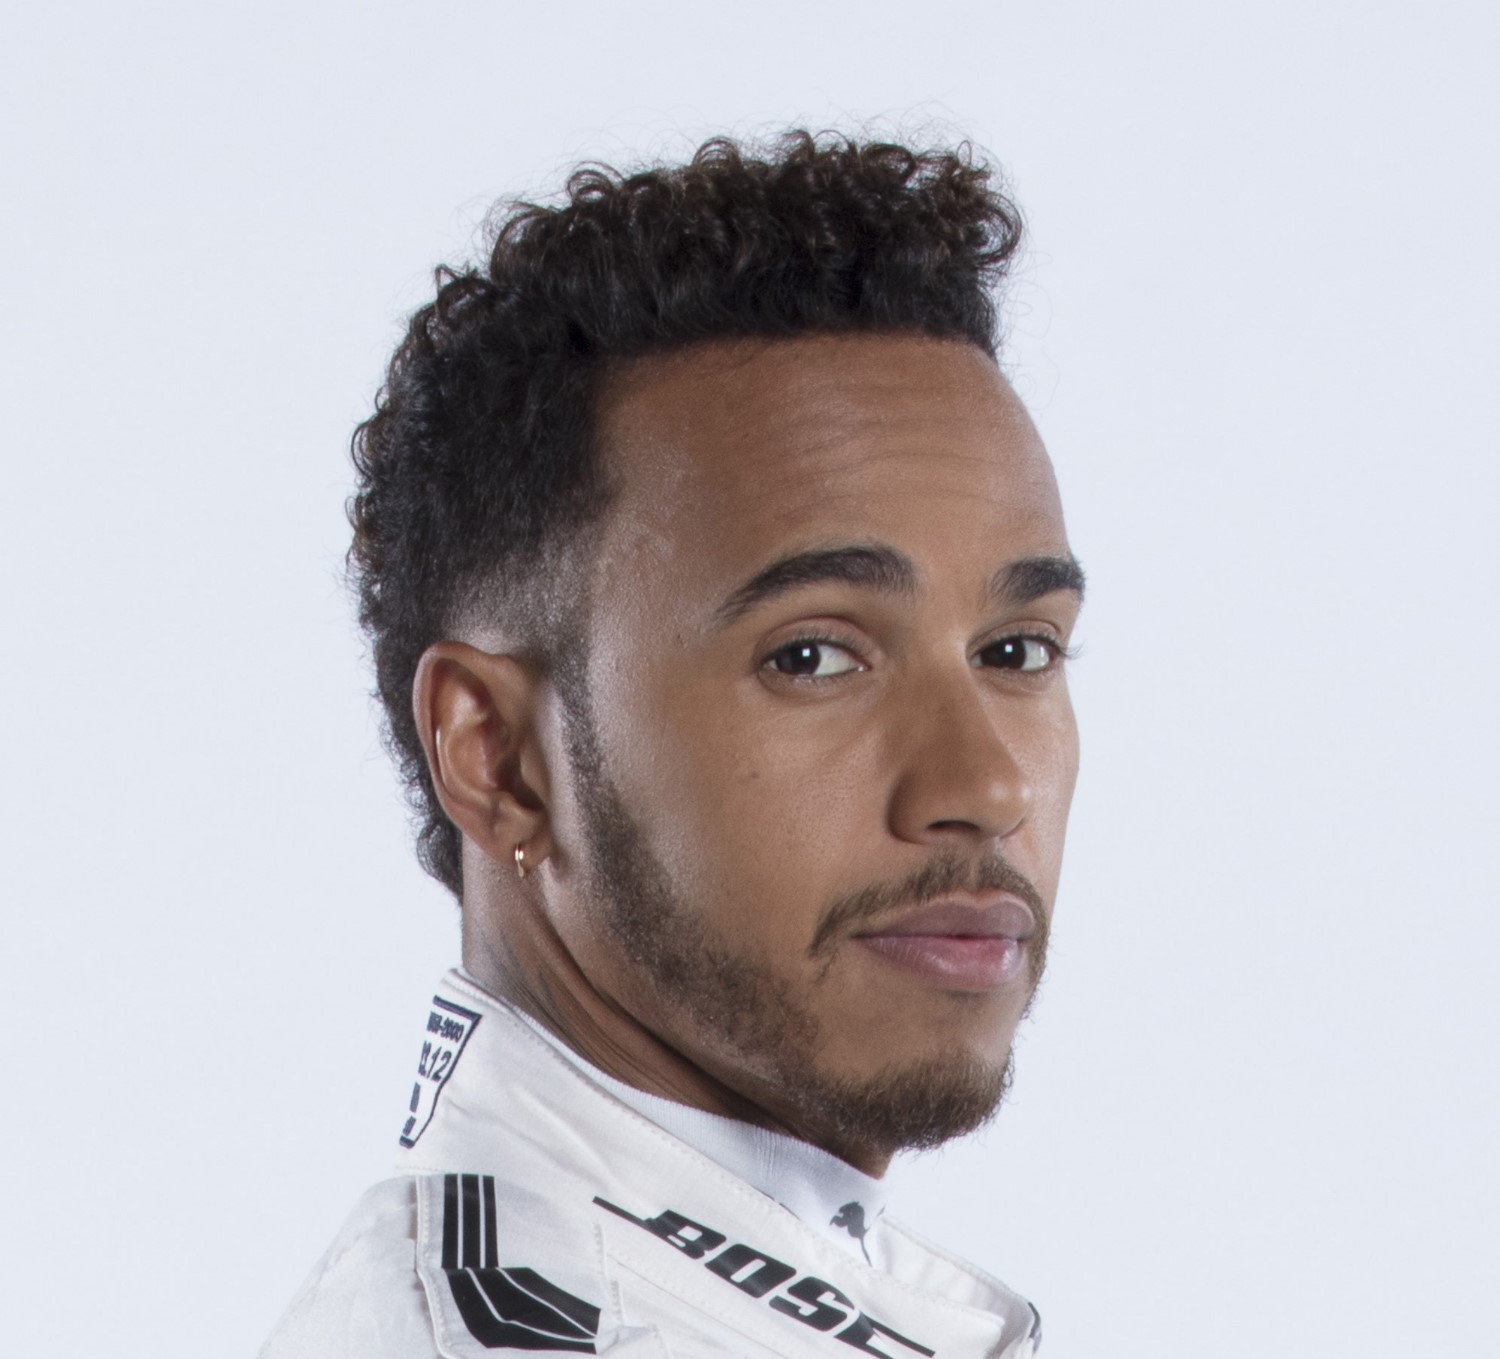 Hamilton perplexed that his boss attended Vettel's birthday party